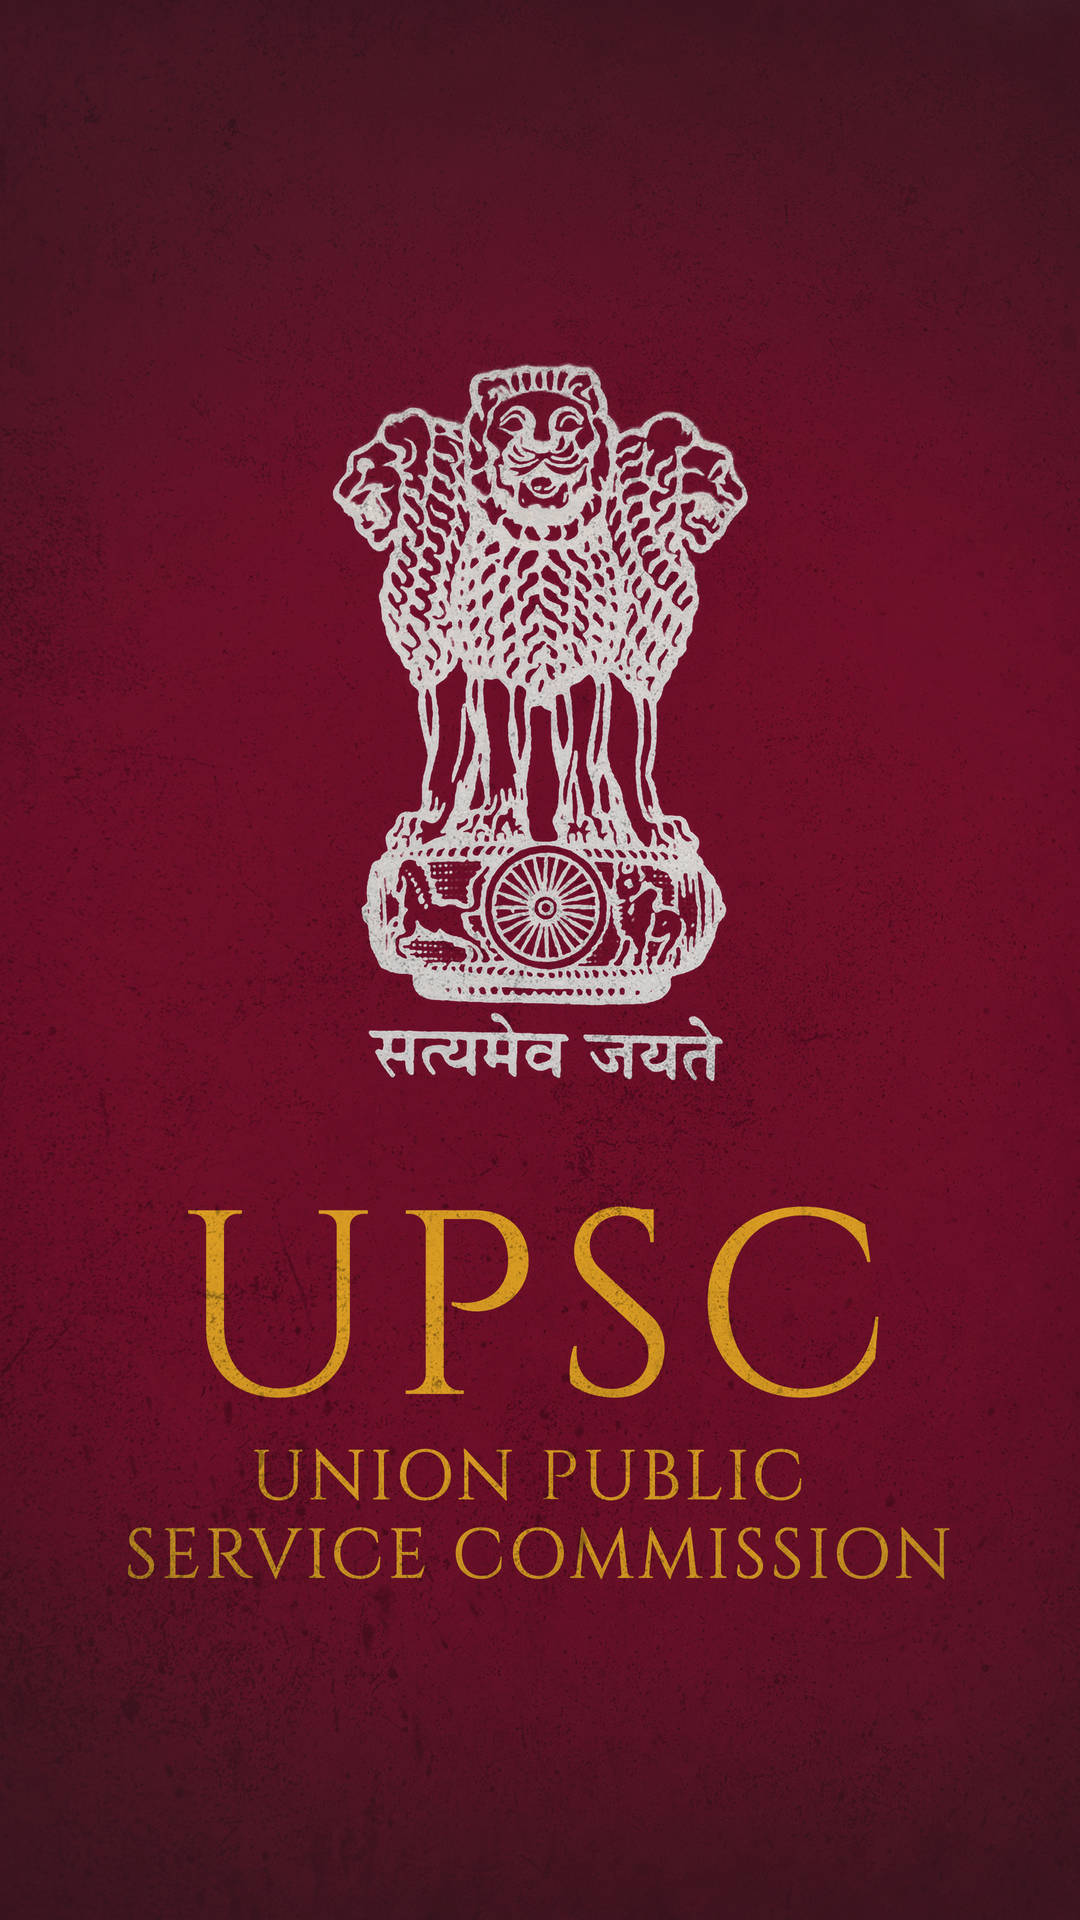 Upsc Logo On Maroon Wallpaper